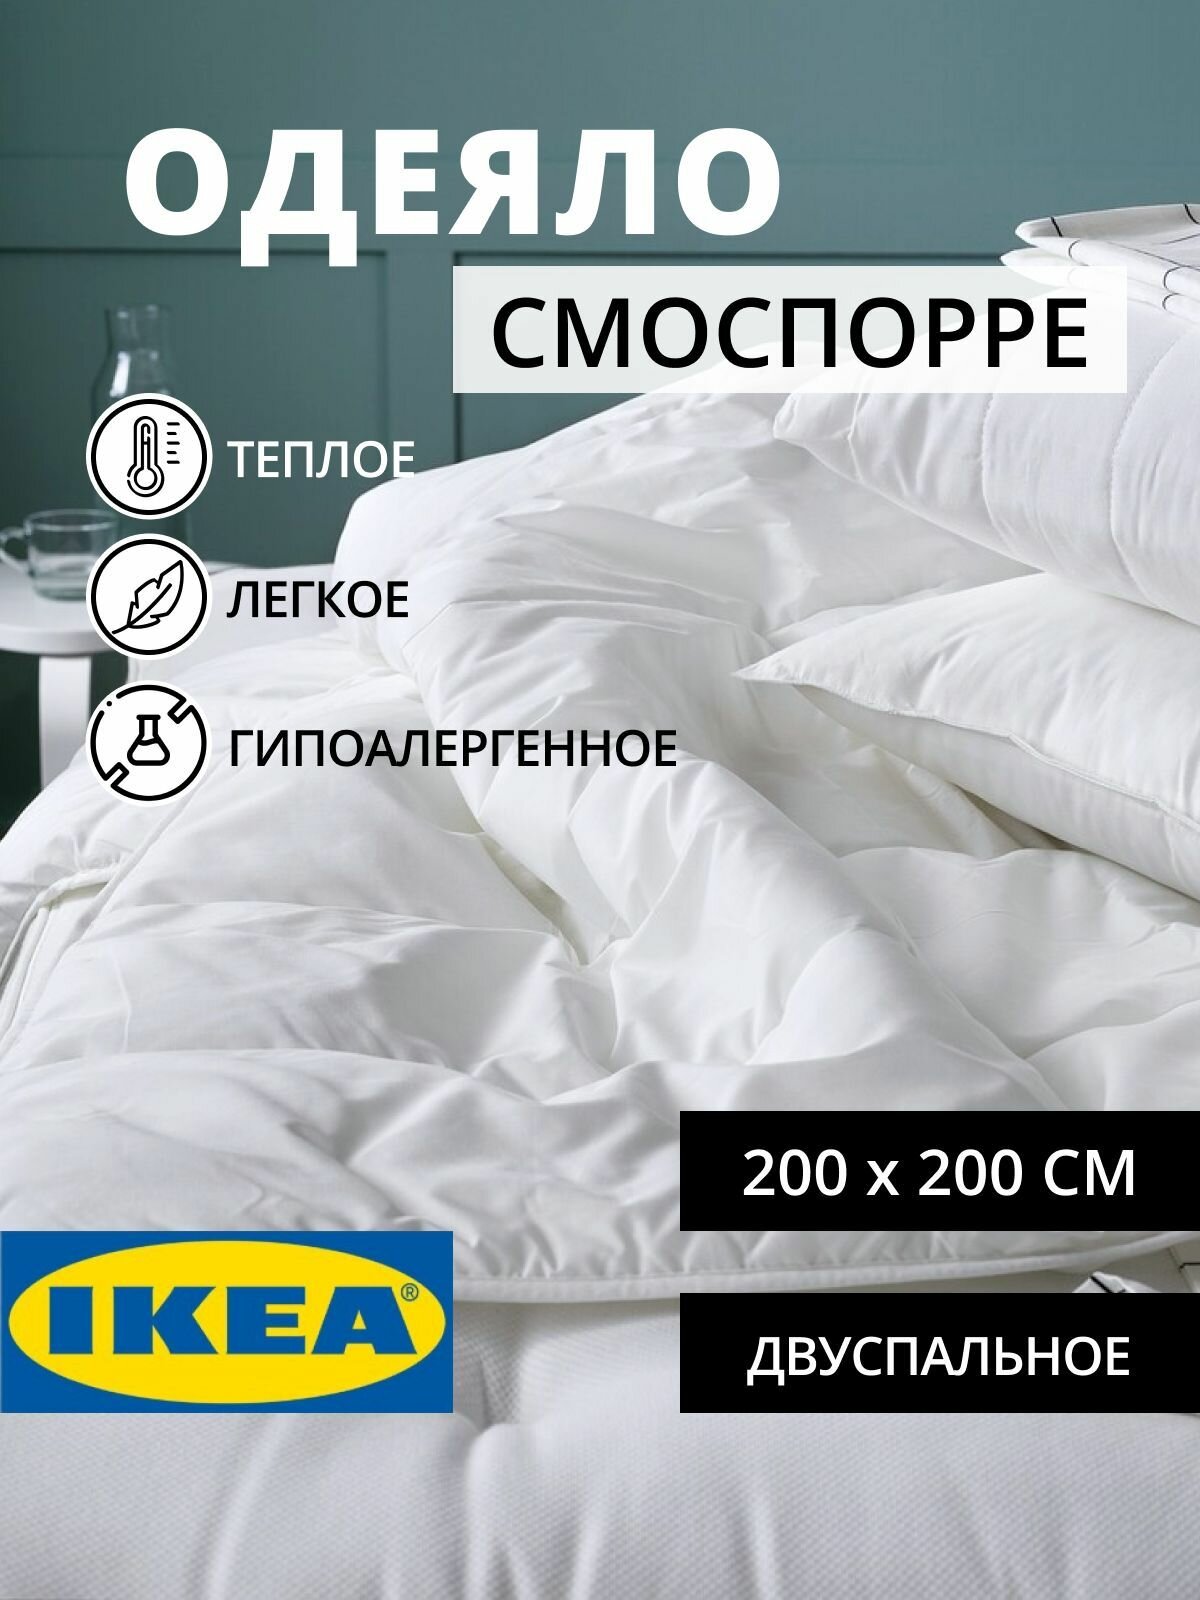 Одеяло смоспорре икеа , легкое 2-х спальное , 200х200 см